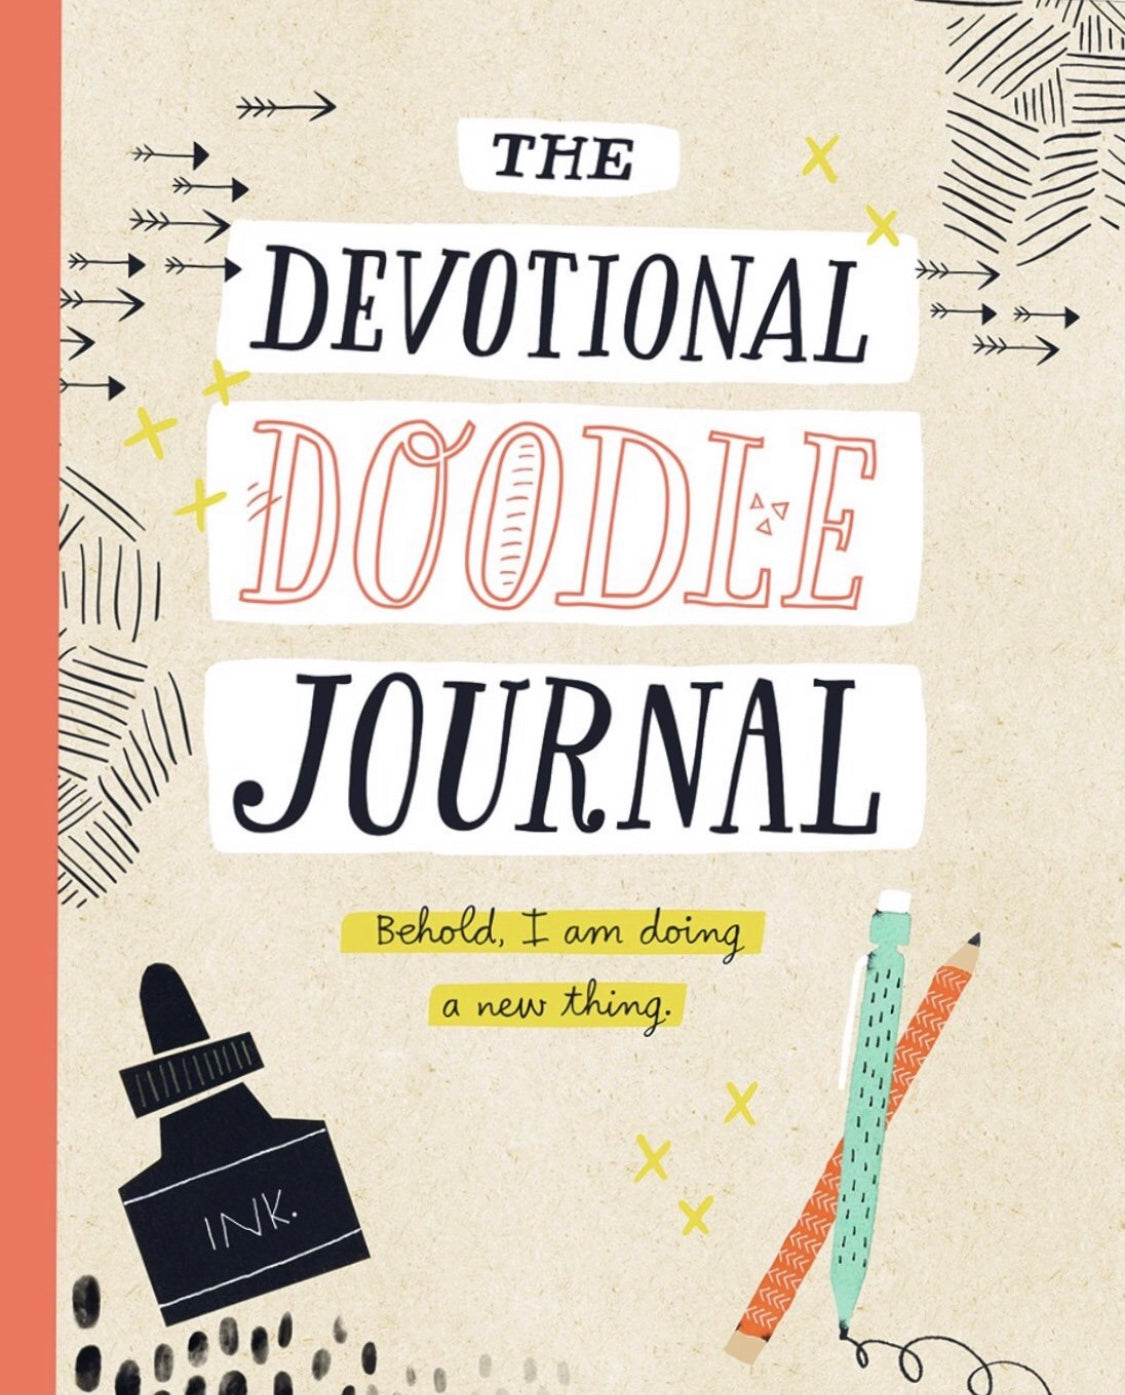 Dayspring The Devotional Doodle Journal for Kids